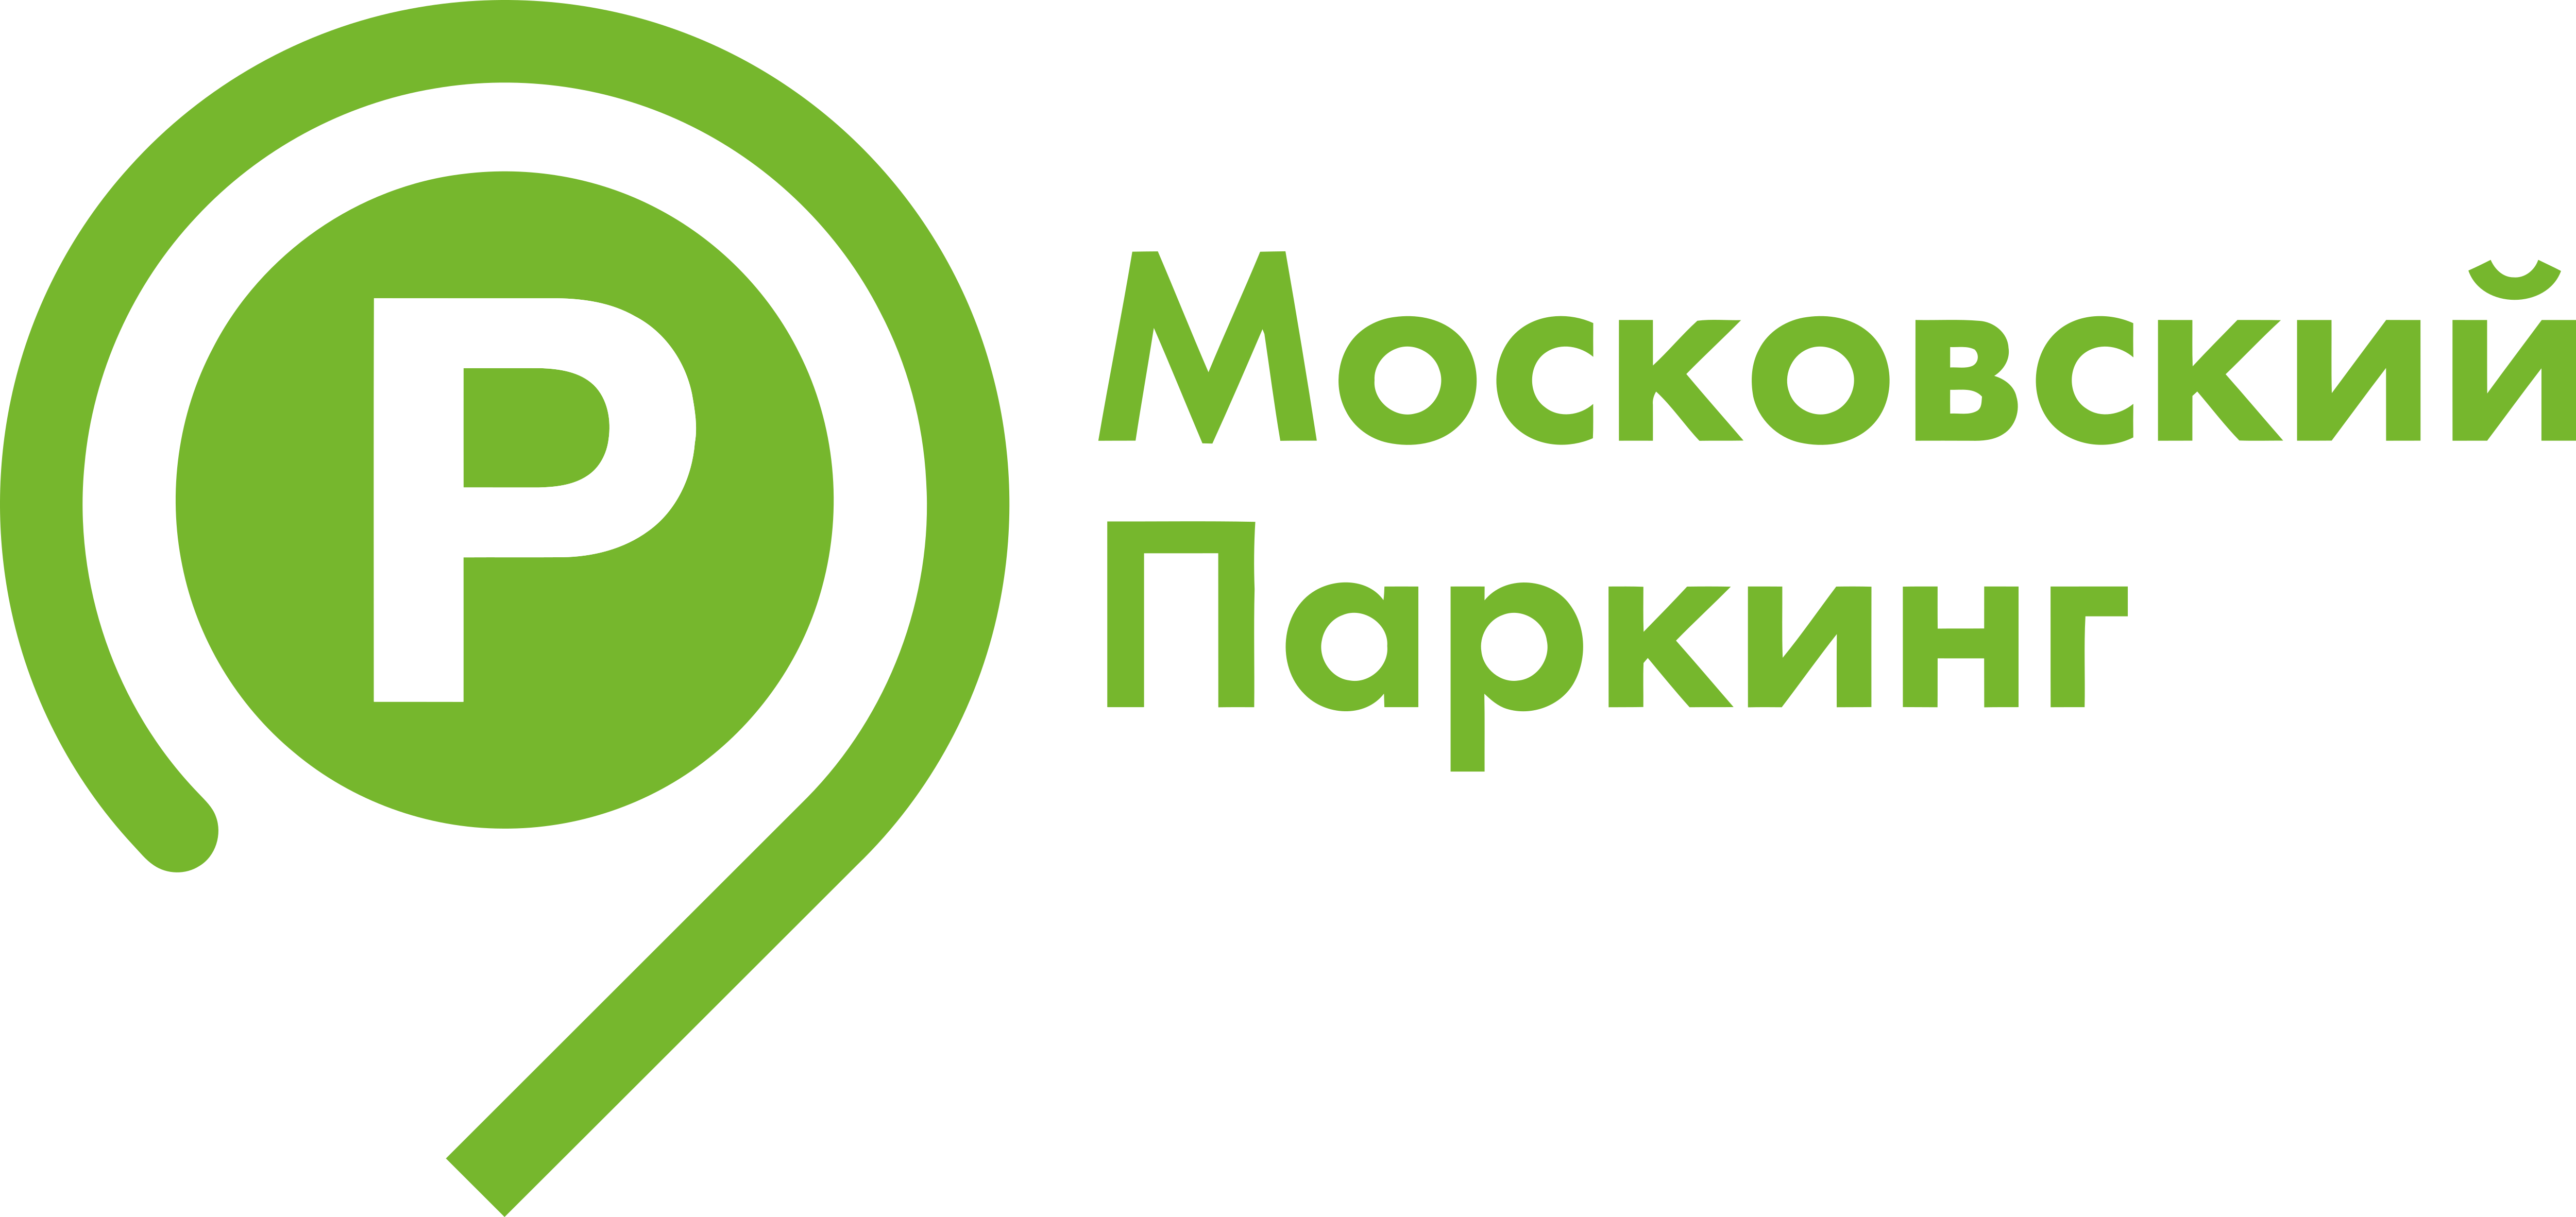 Московский паркинг. АМПП логотип. Моспаркинг логотип. Московские парковки логотип. 8 495 539